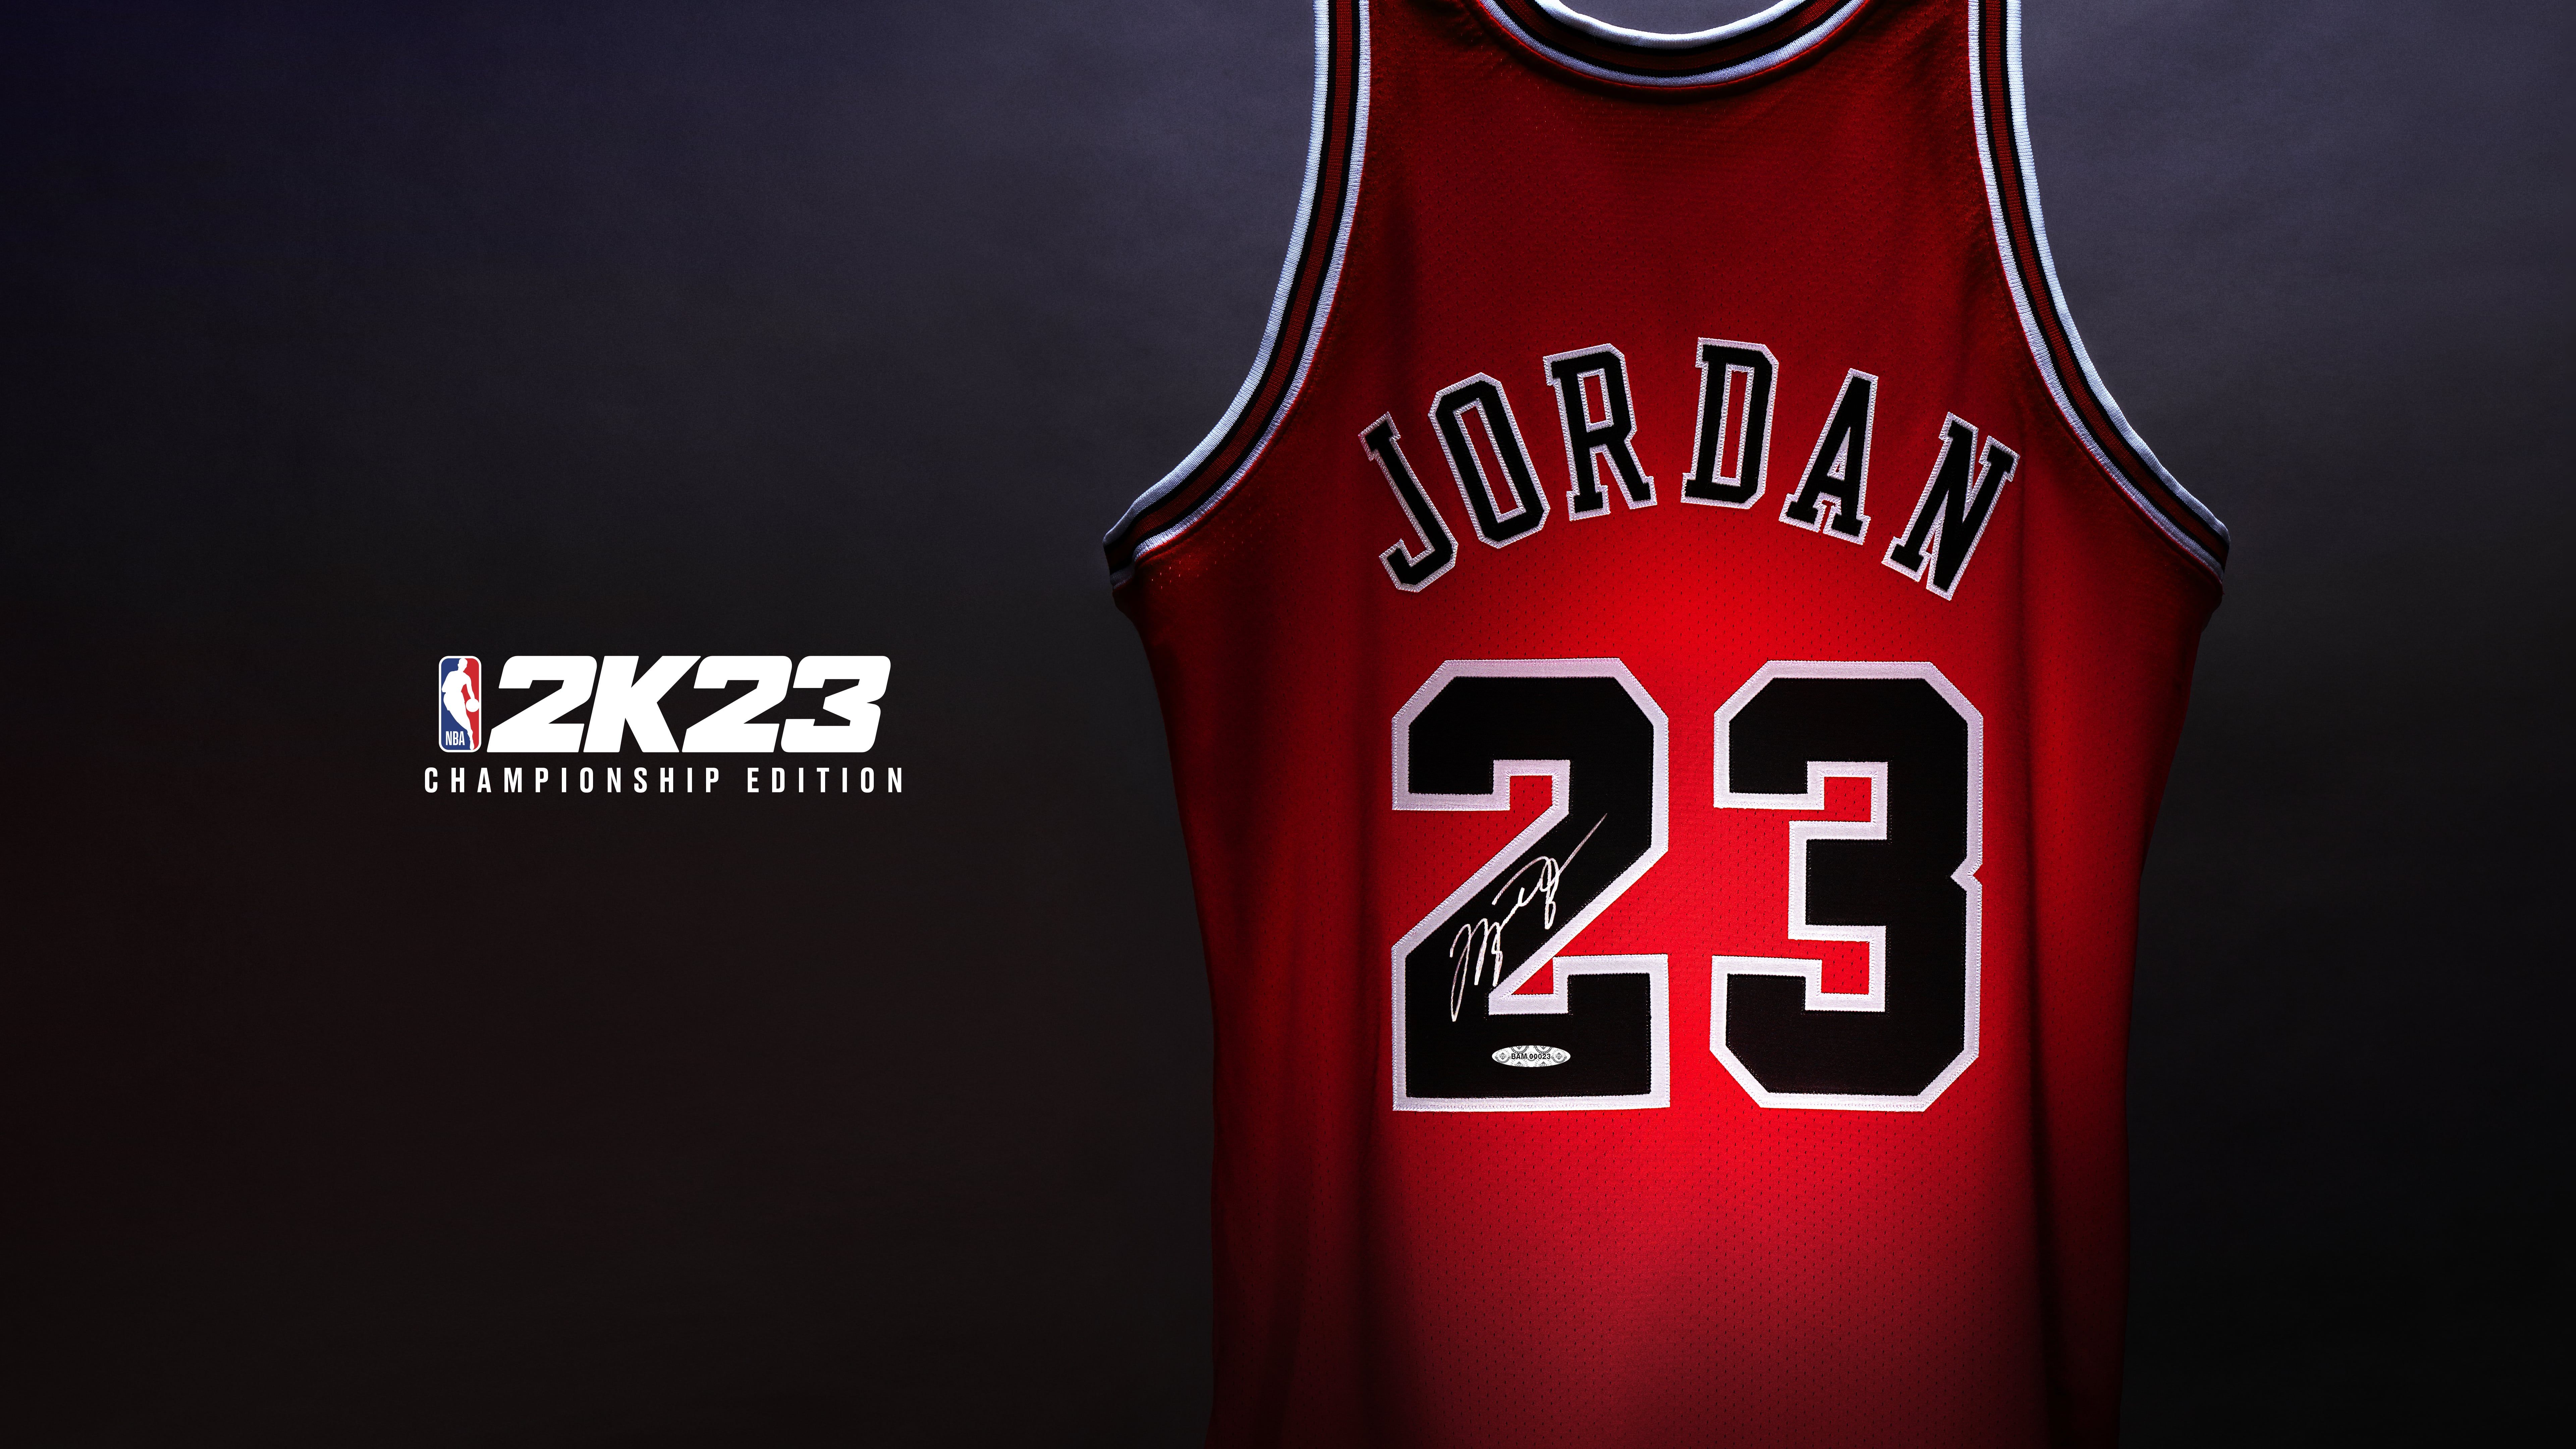 Michael Jordan Wallpaper and Background